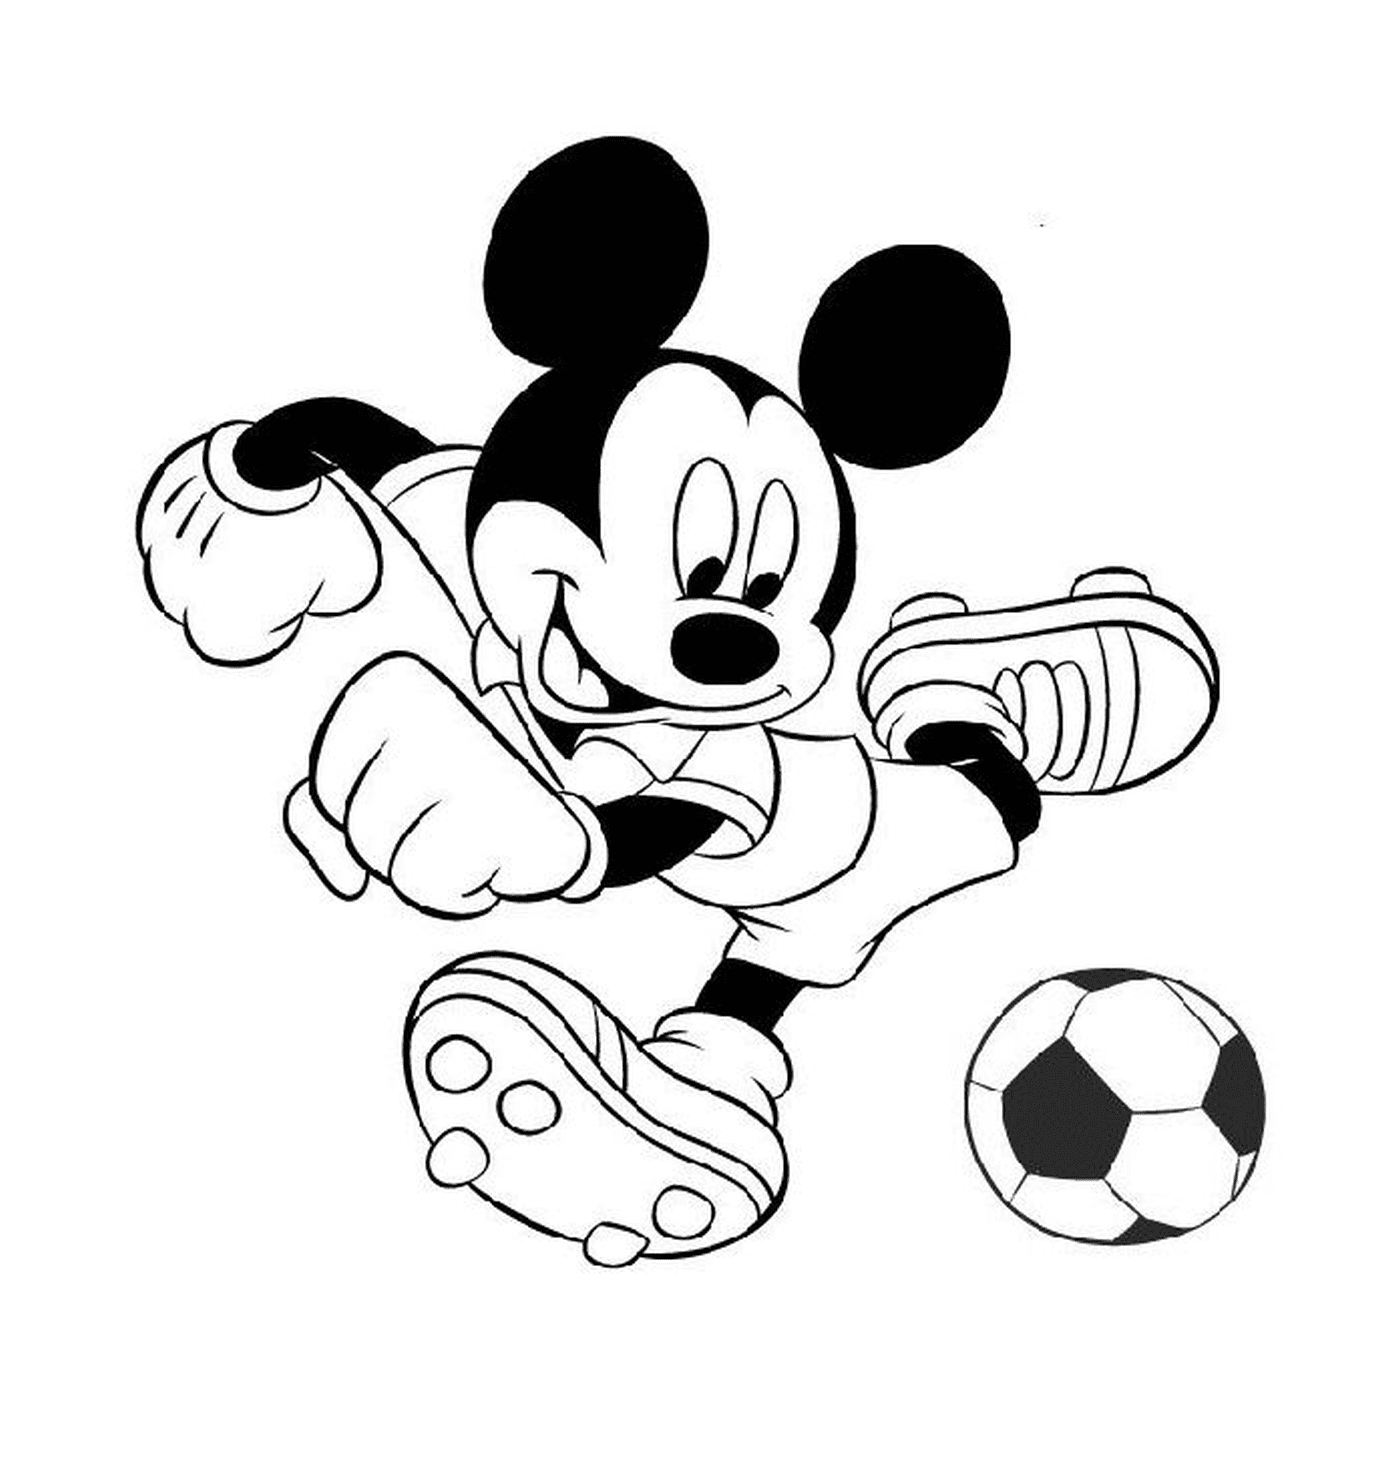  Mickey Mouse joga futebol 